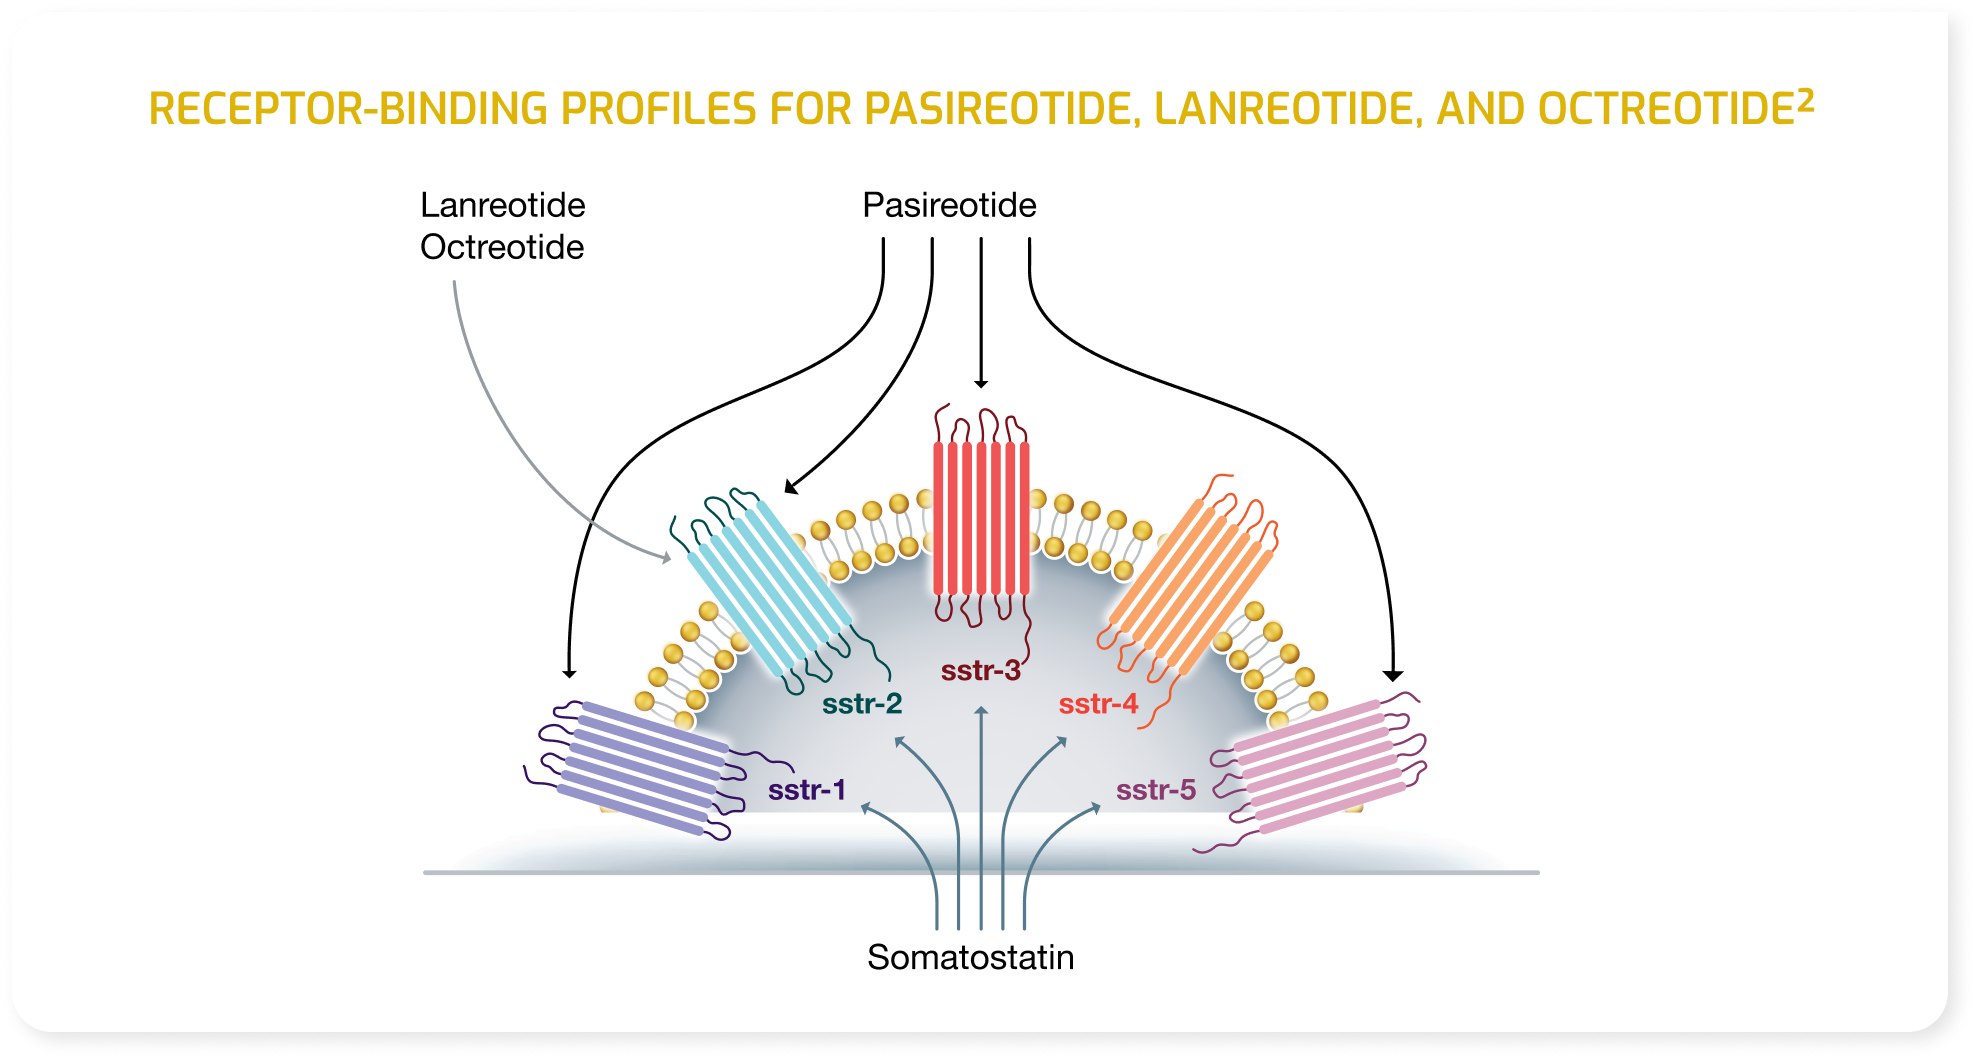 Receptor-binding profiles for pasireotide, lanreotide, and octreotide